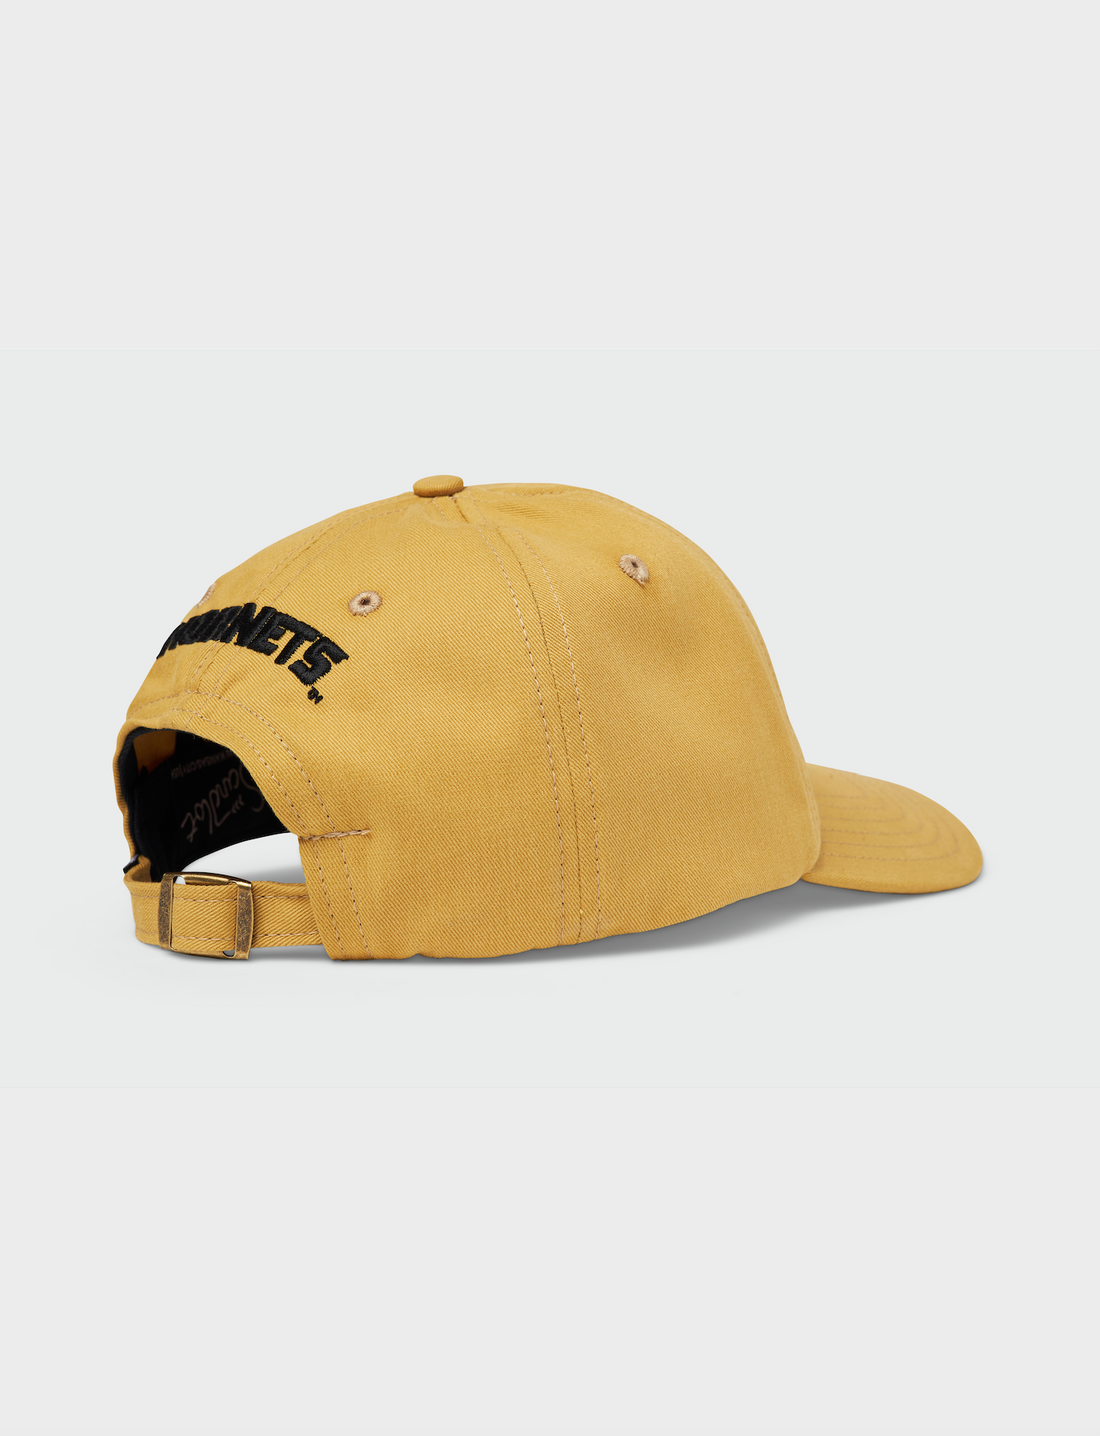 Emporia State University Crest - Honey Pre-Curved Hat